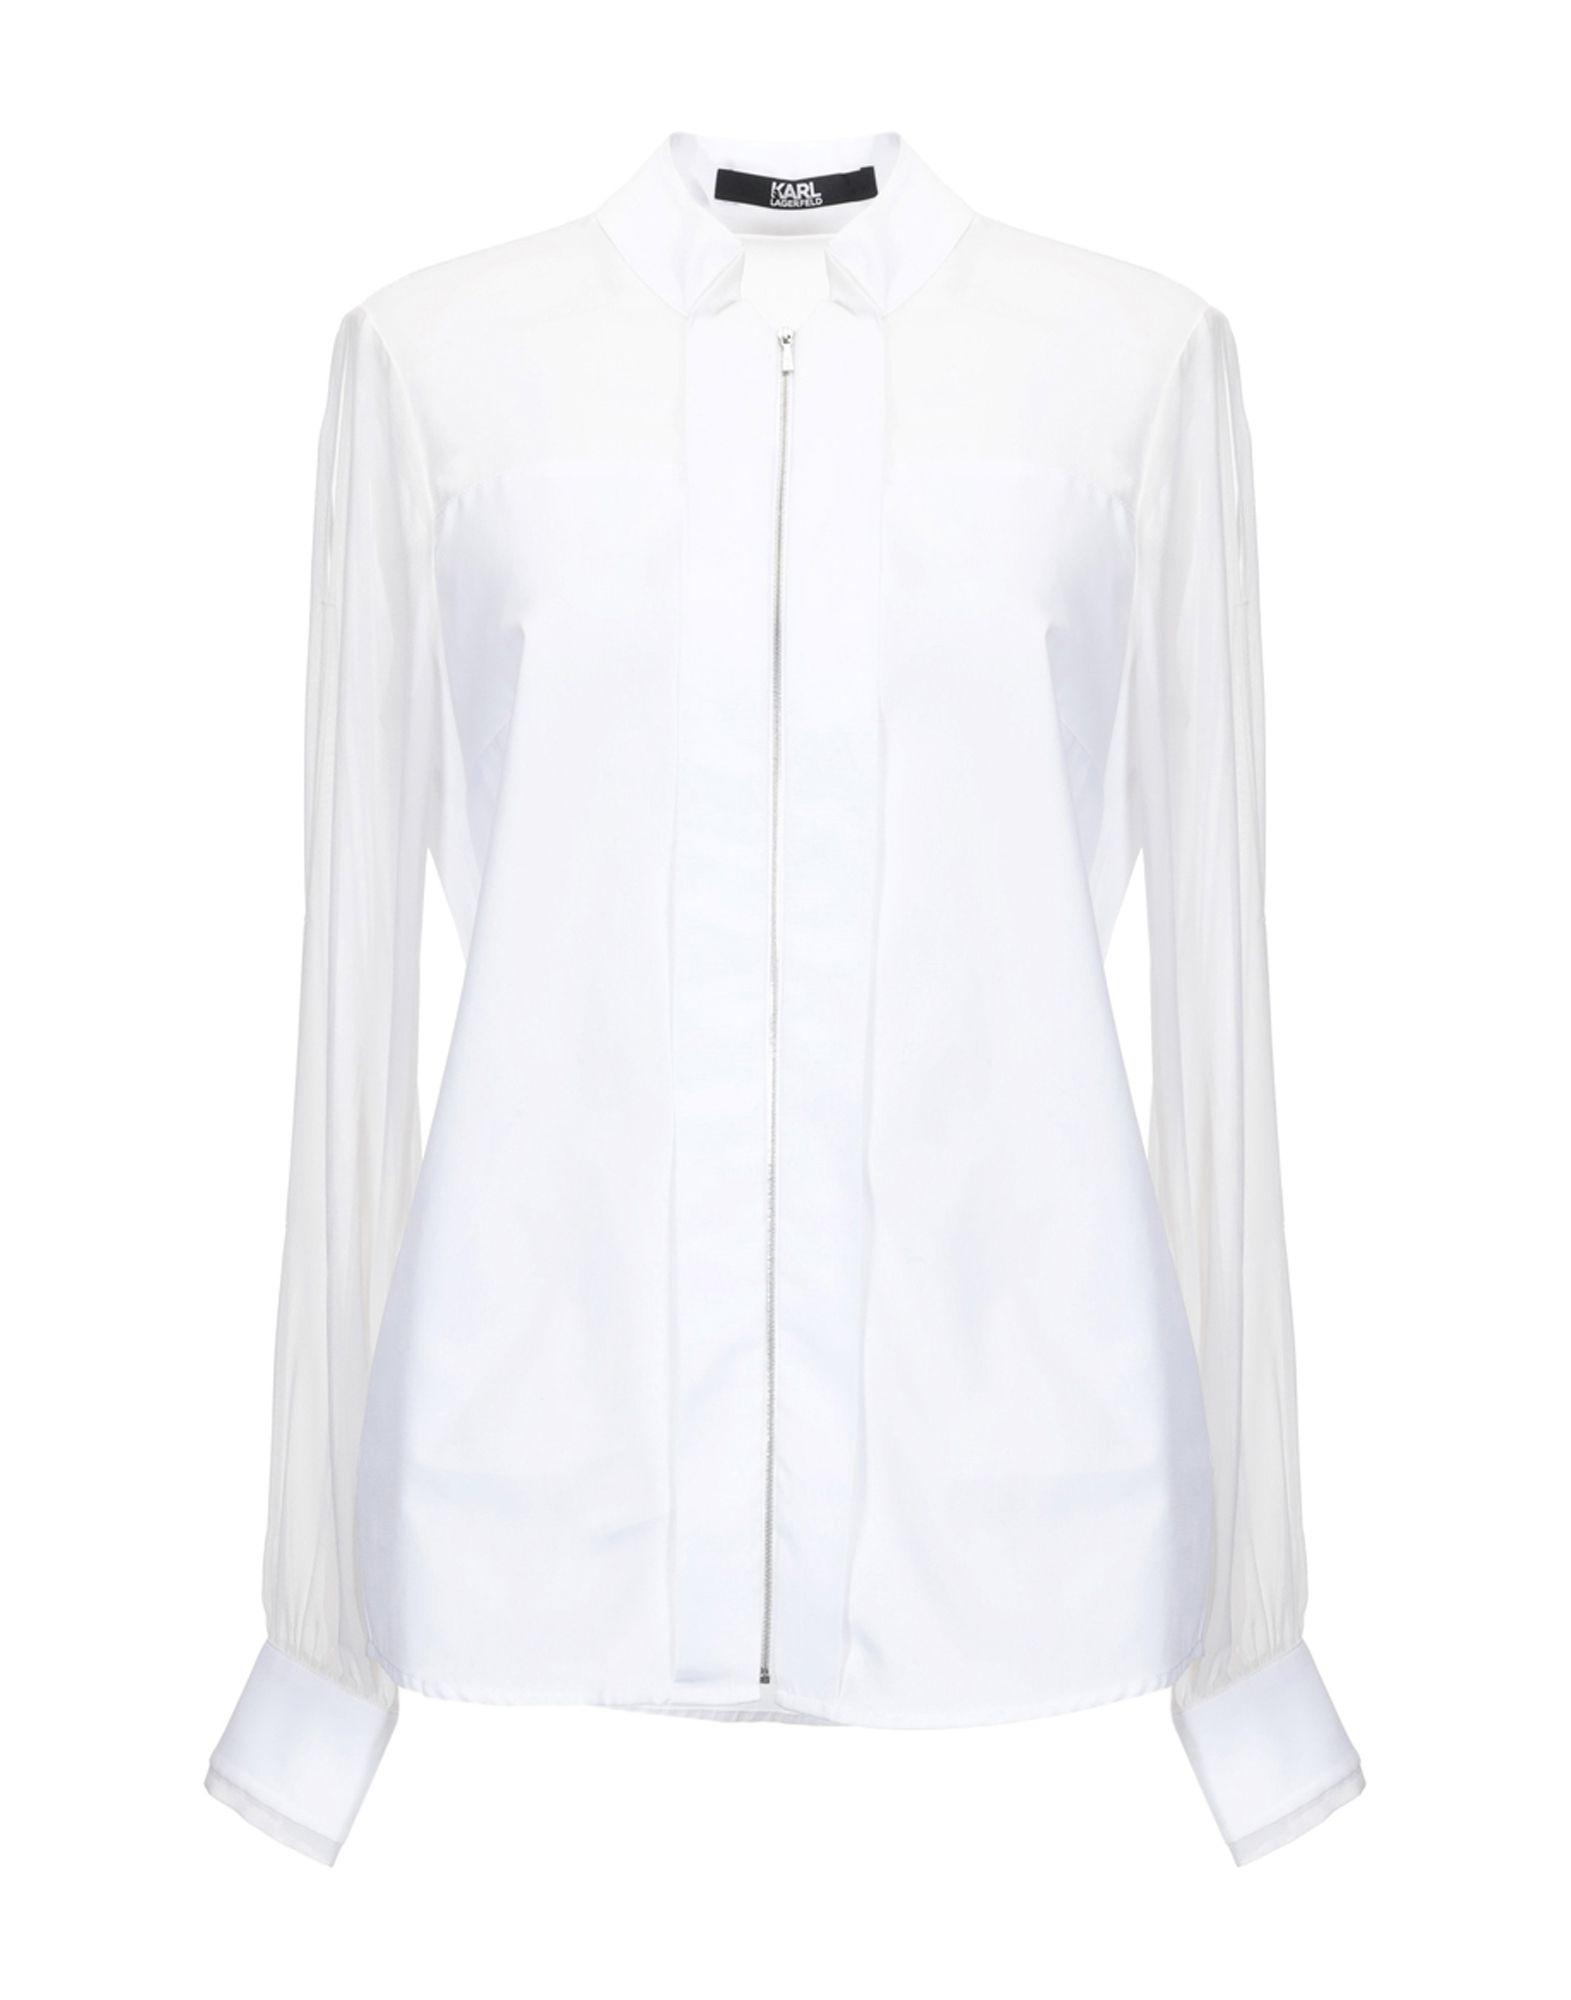 Karl Lagerfeld Cotton Shirt in White - Lyst